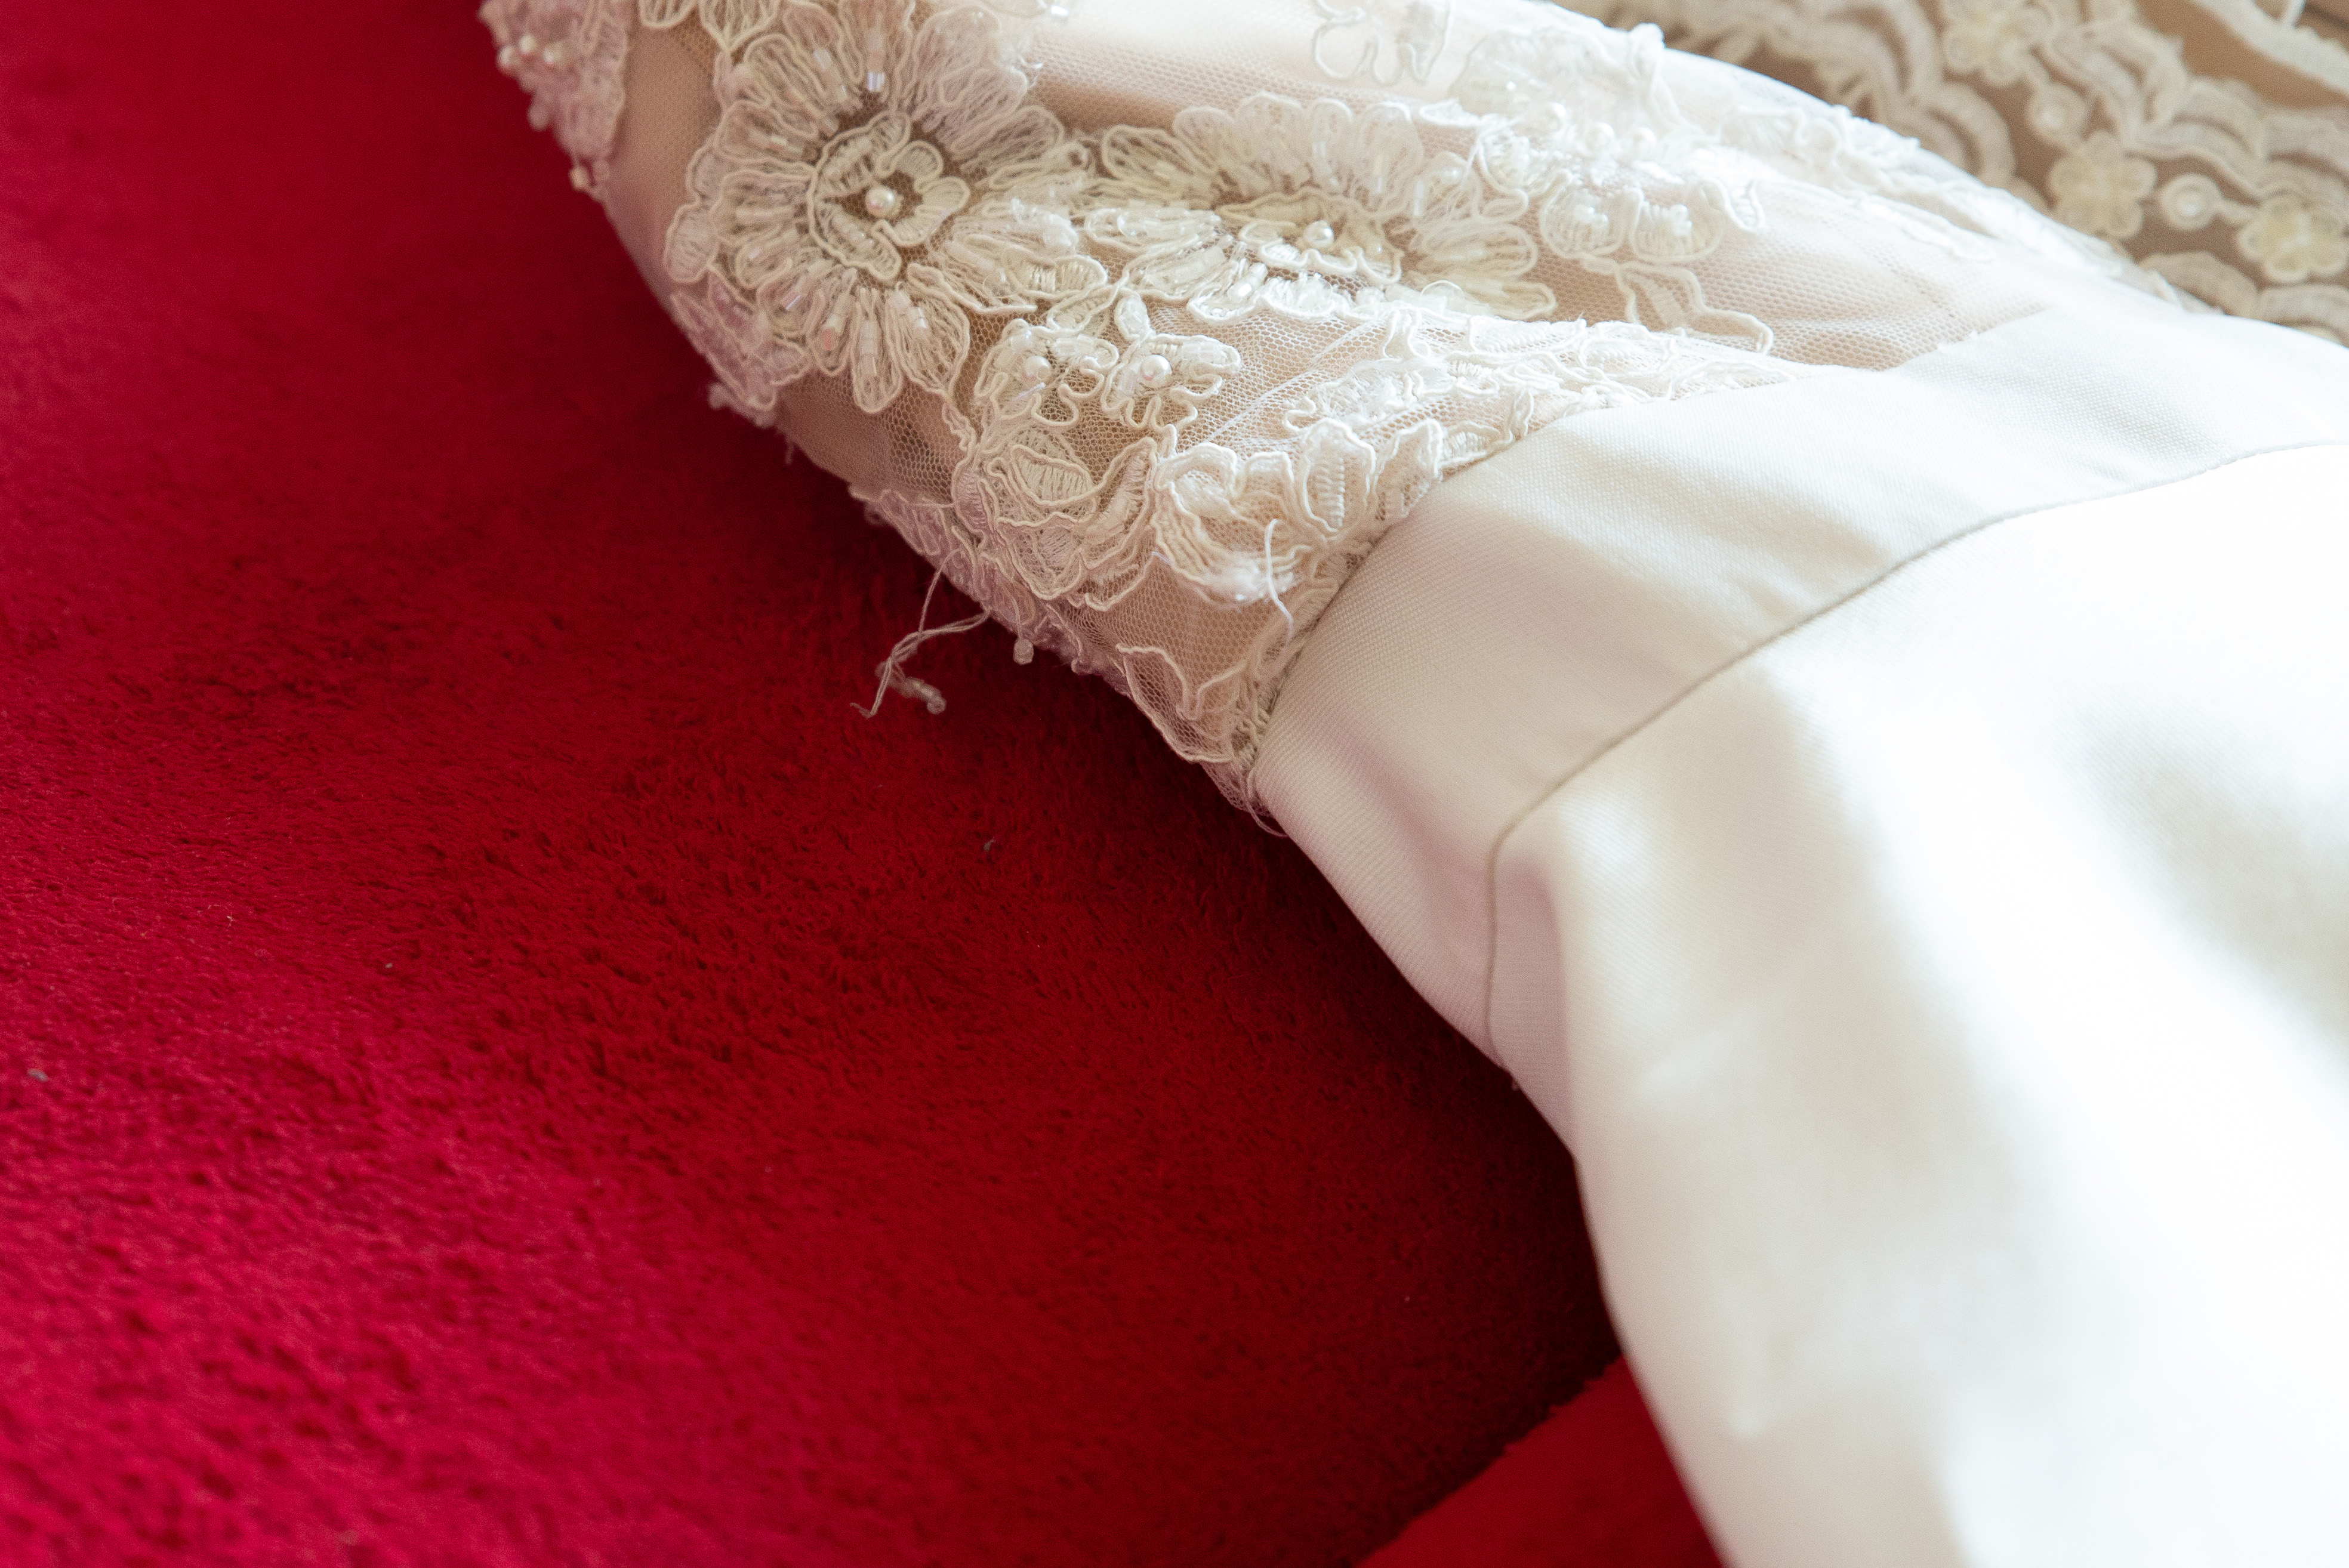 Close-up of a ripped wedding dress | Source: Shutterstock